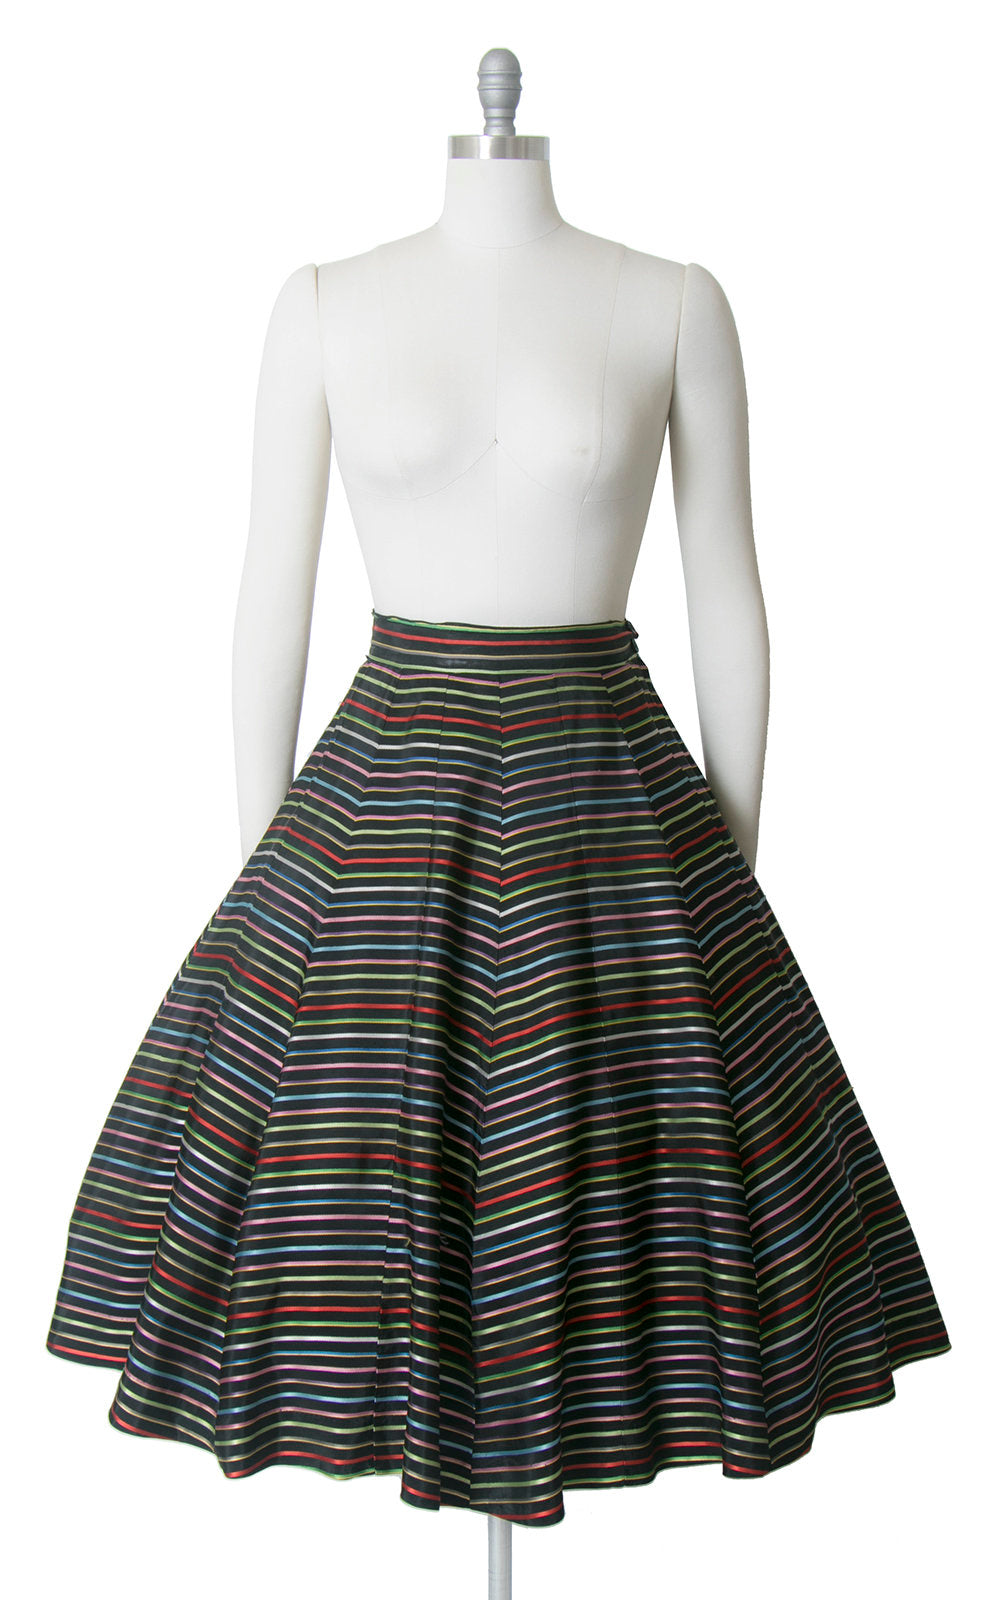 Vintage 1950s Skirt | 50s Rainbow Striped Rayon Taffeta Full Party Skirt (medium)